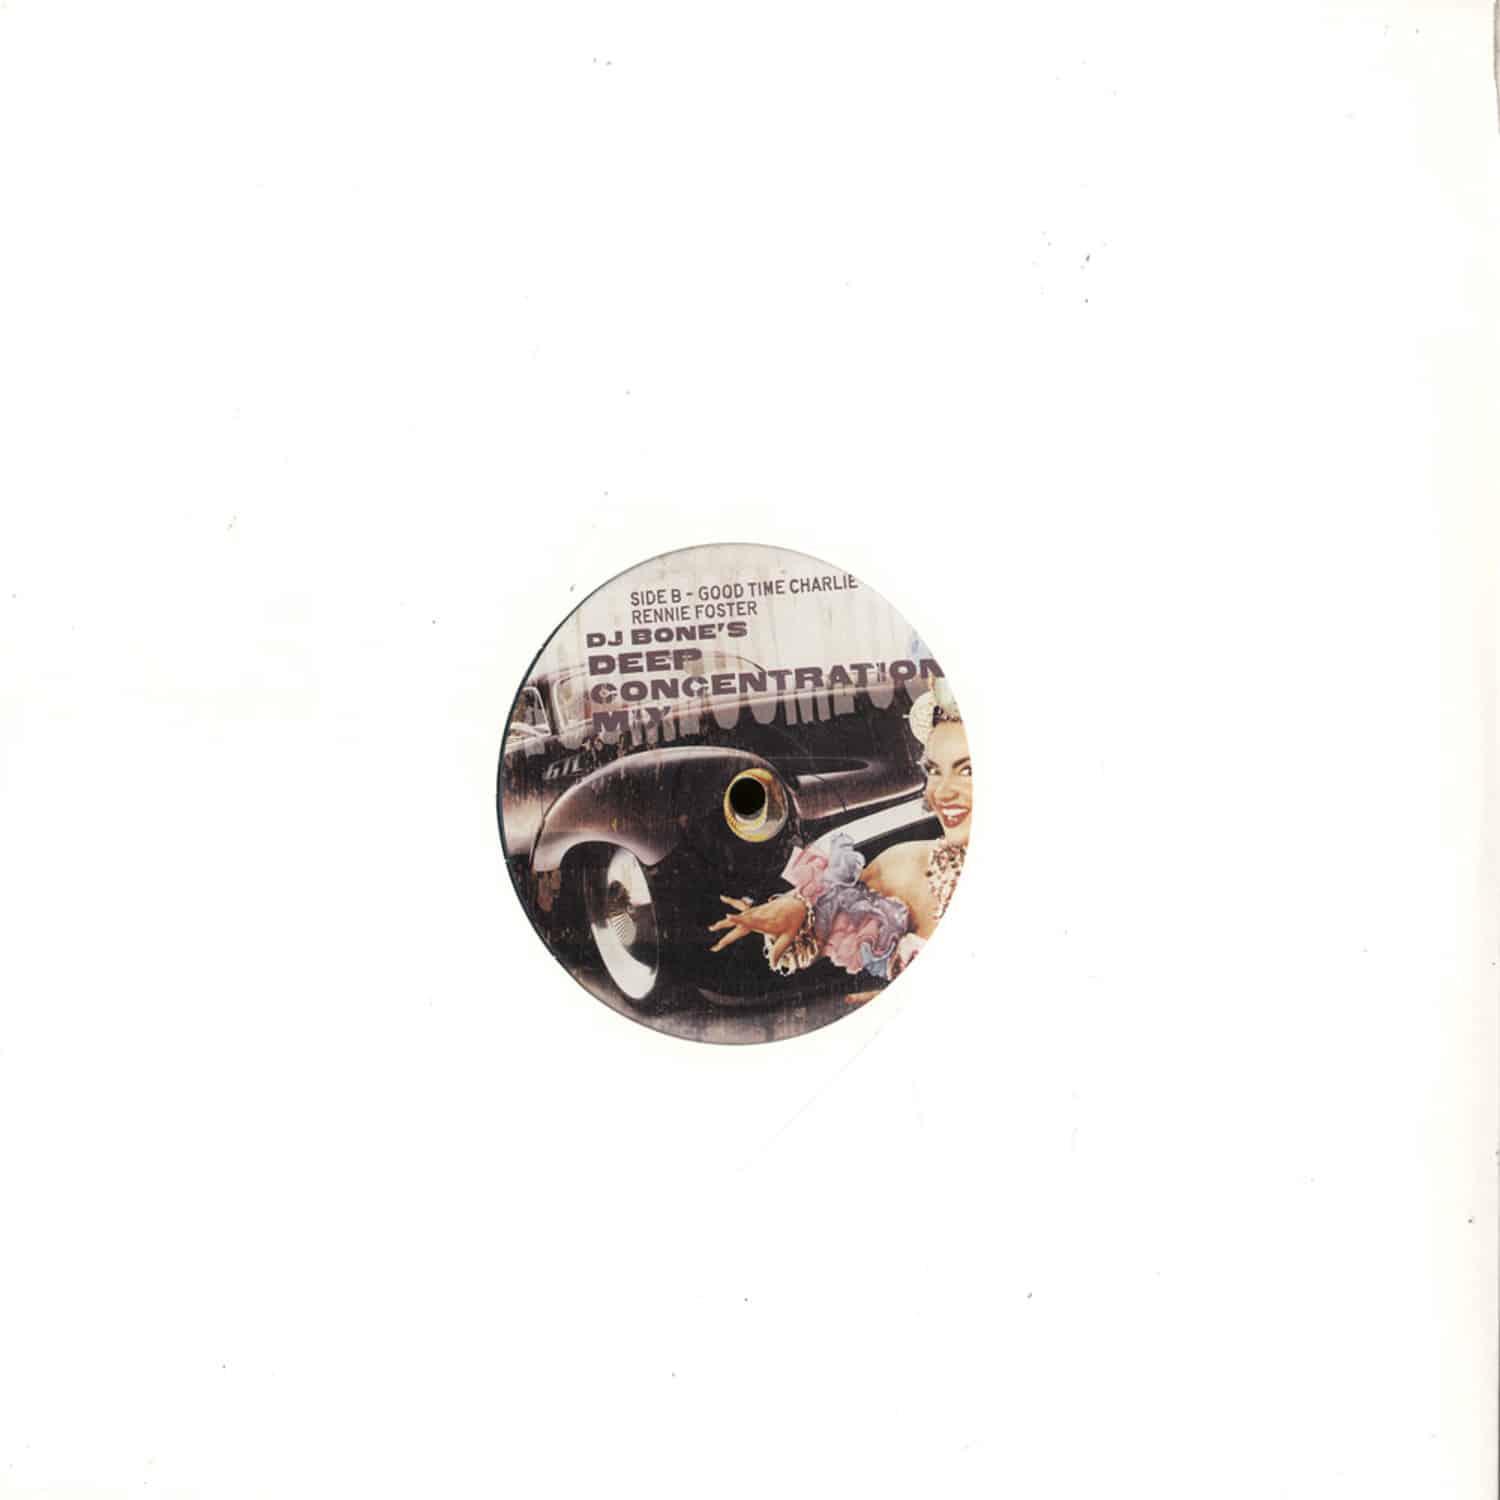 Rennie Foster - GOOD TIME CHARLIE EP - AUX 88S ZOOM REMIX 